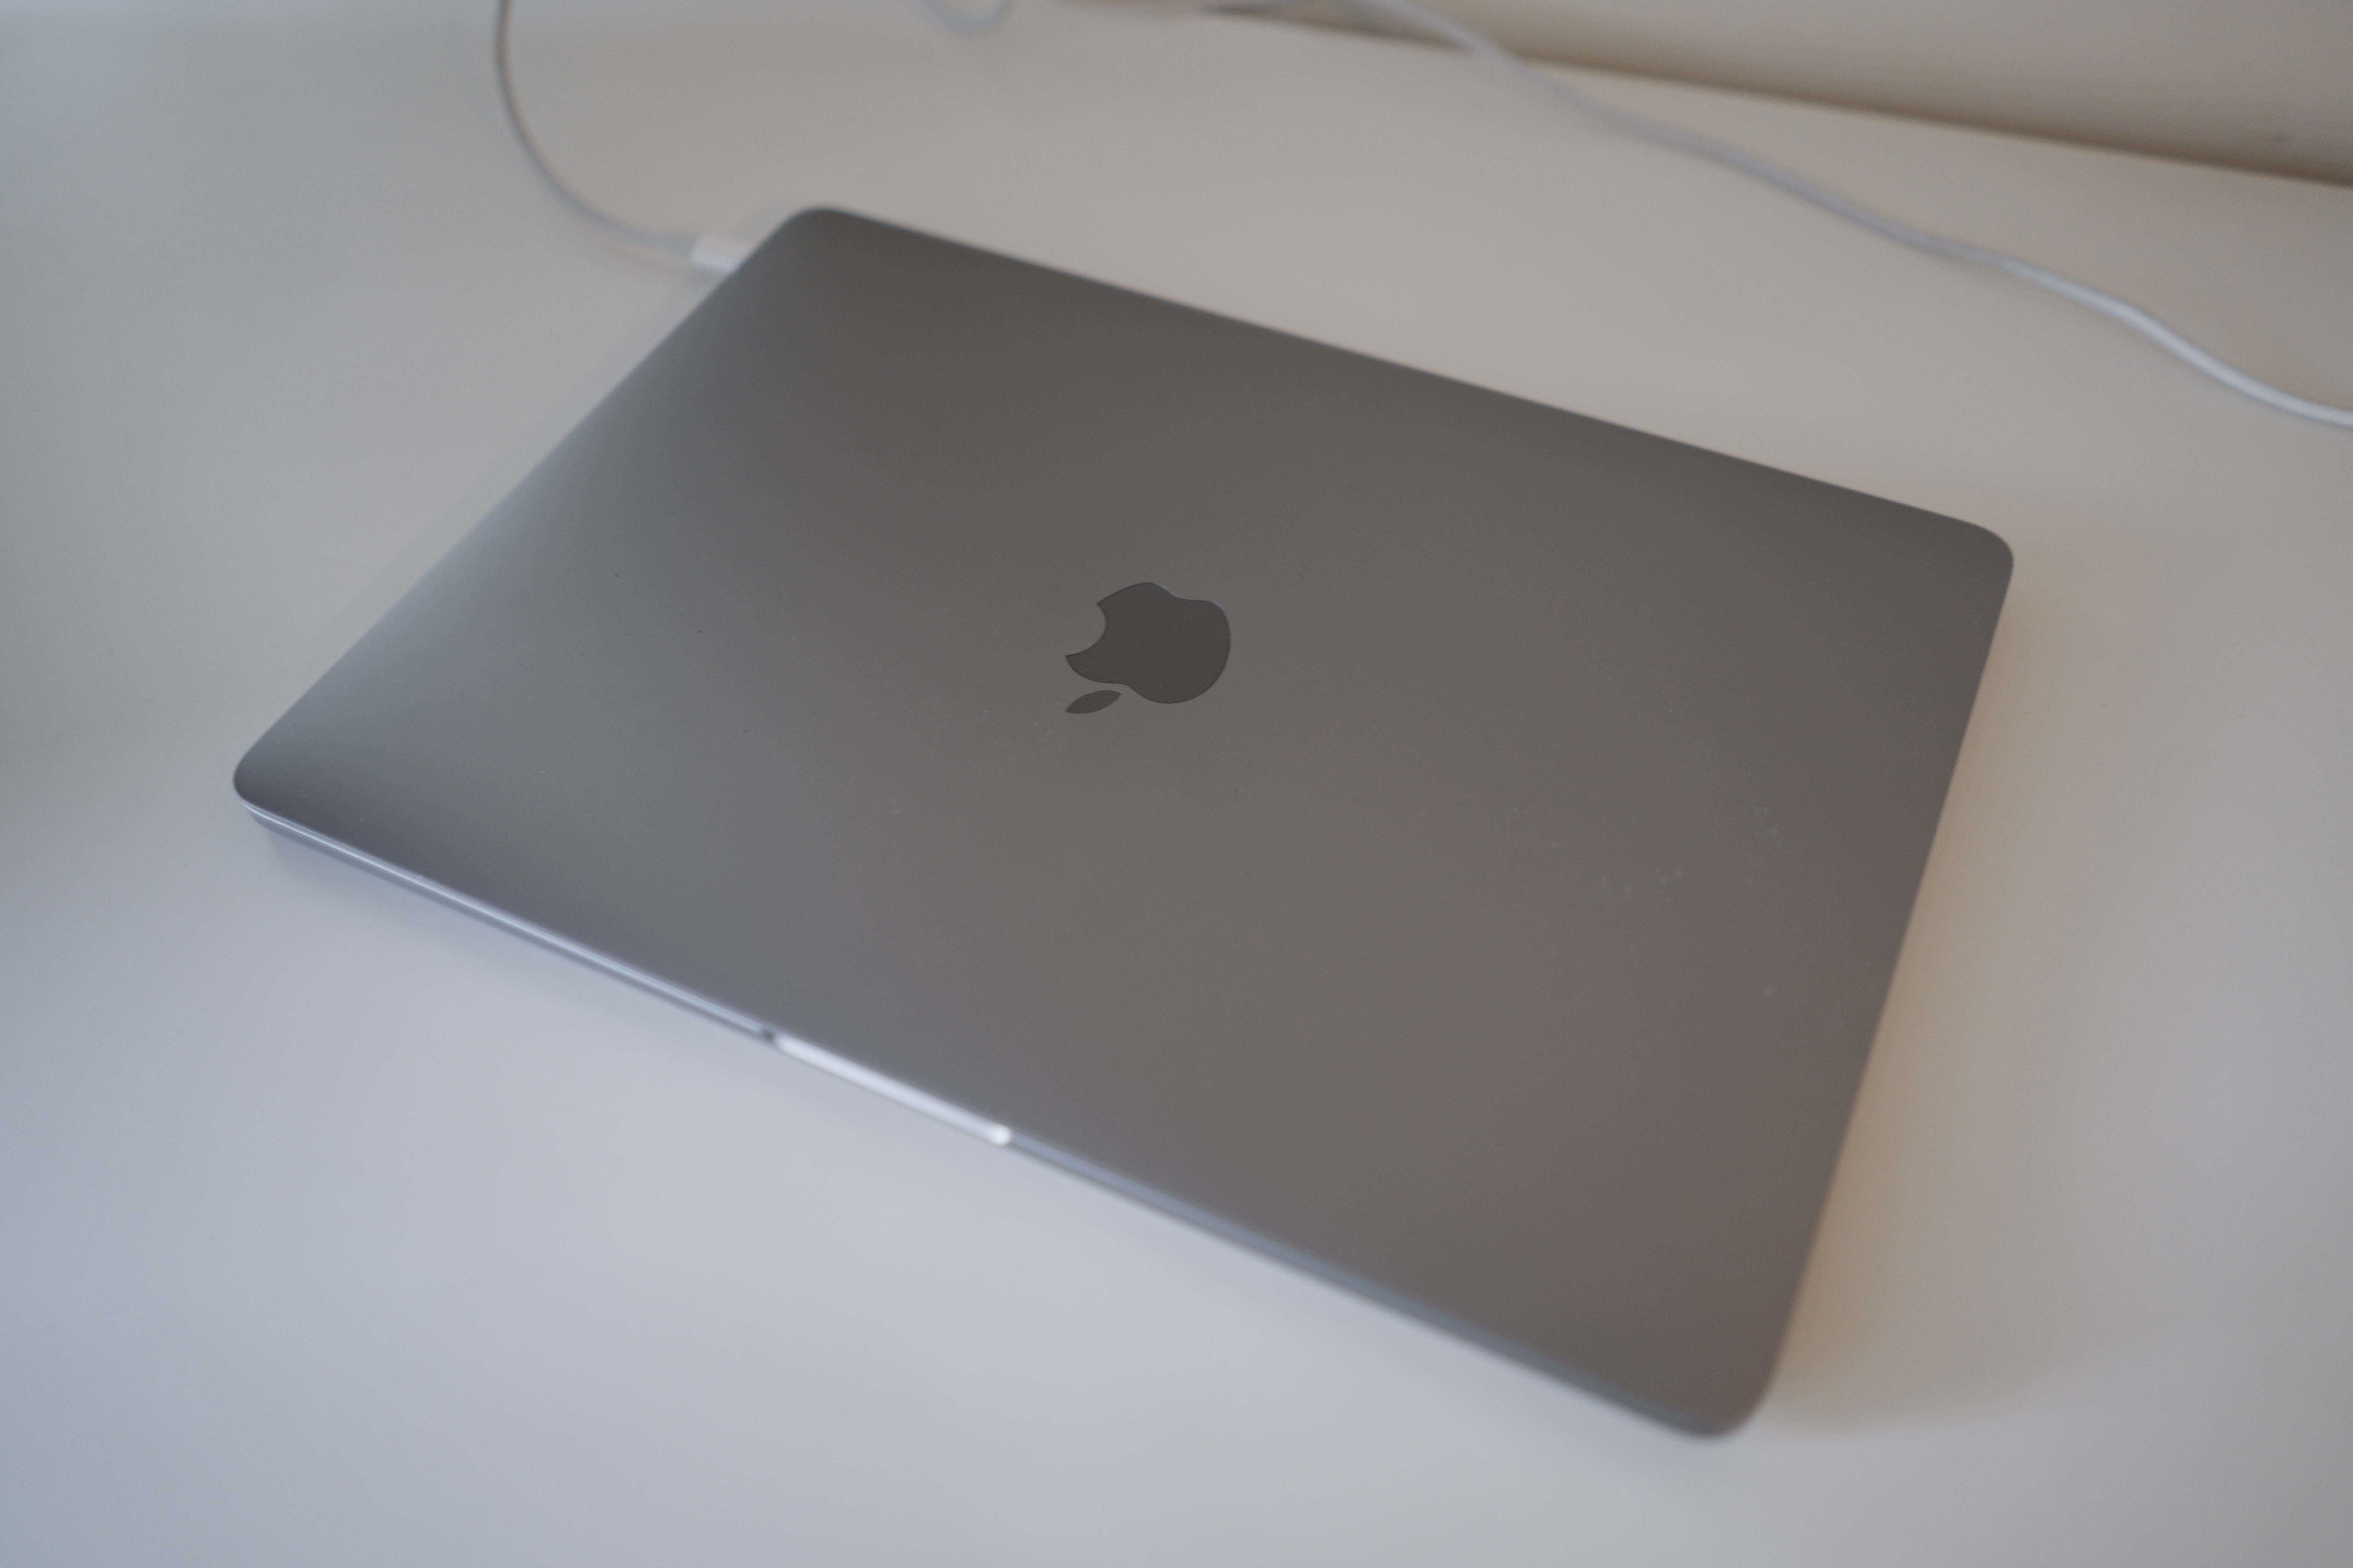 Macbook Pro 2017 Piese sau reparat